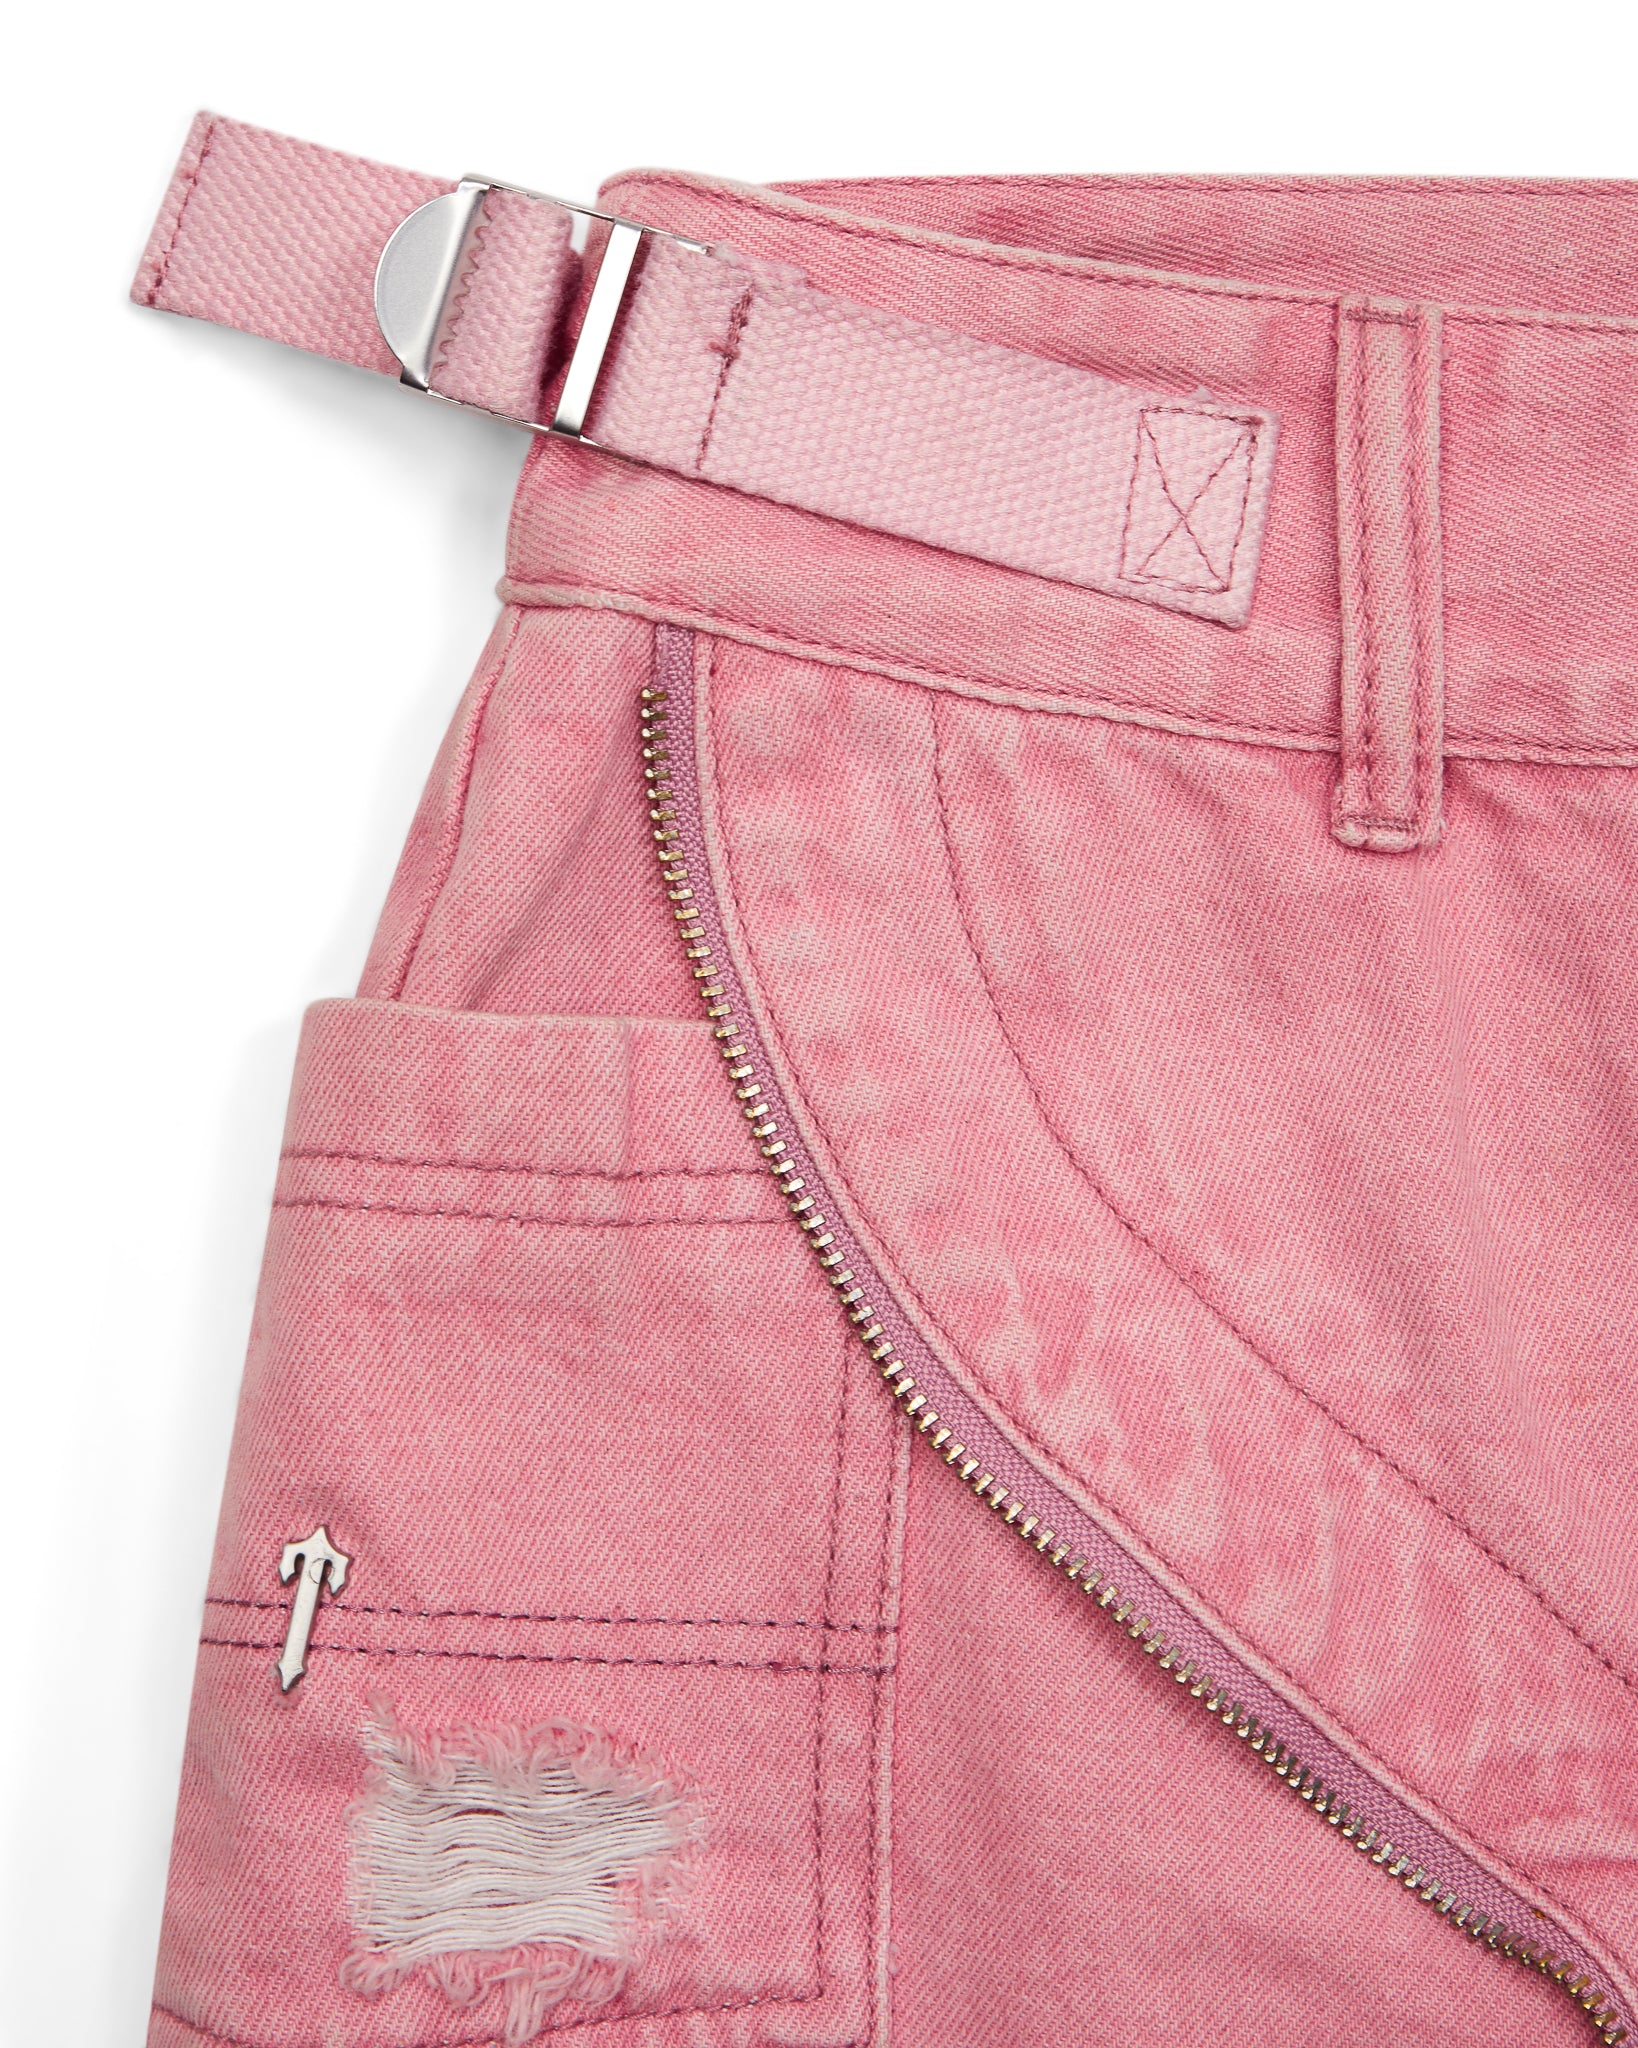 Irongate T Denim Zip Detail Mini Skirt - Pink